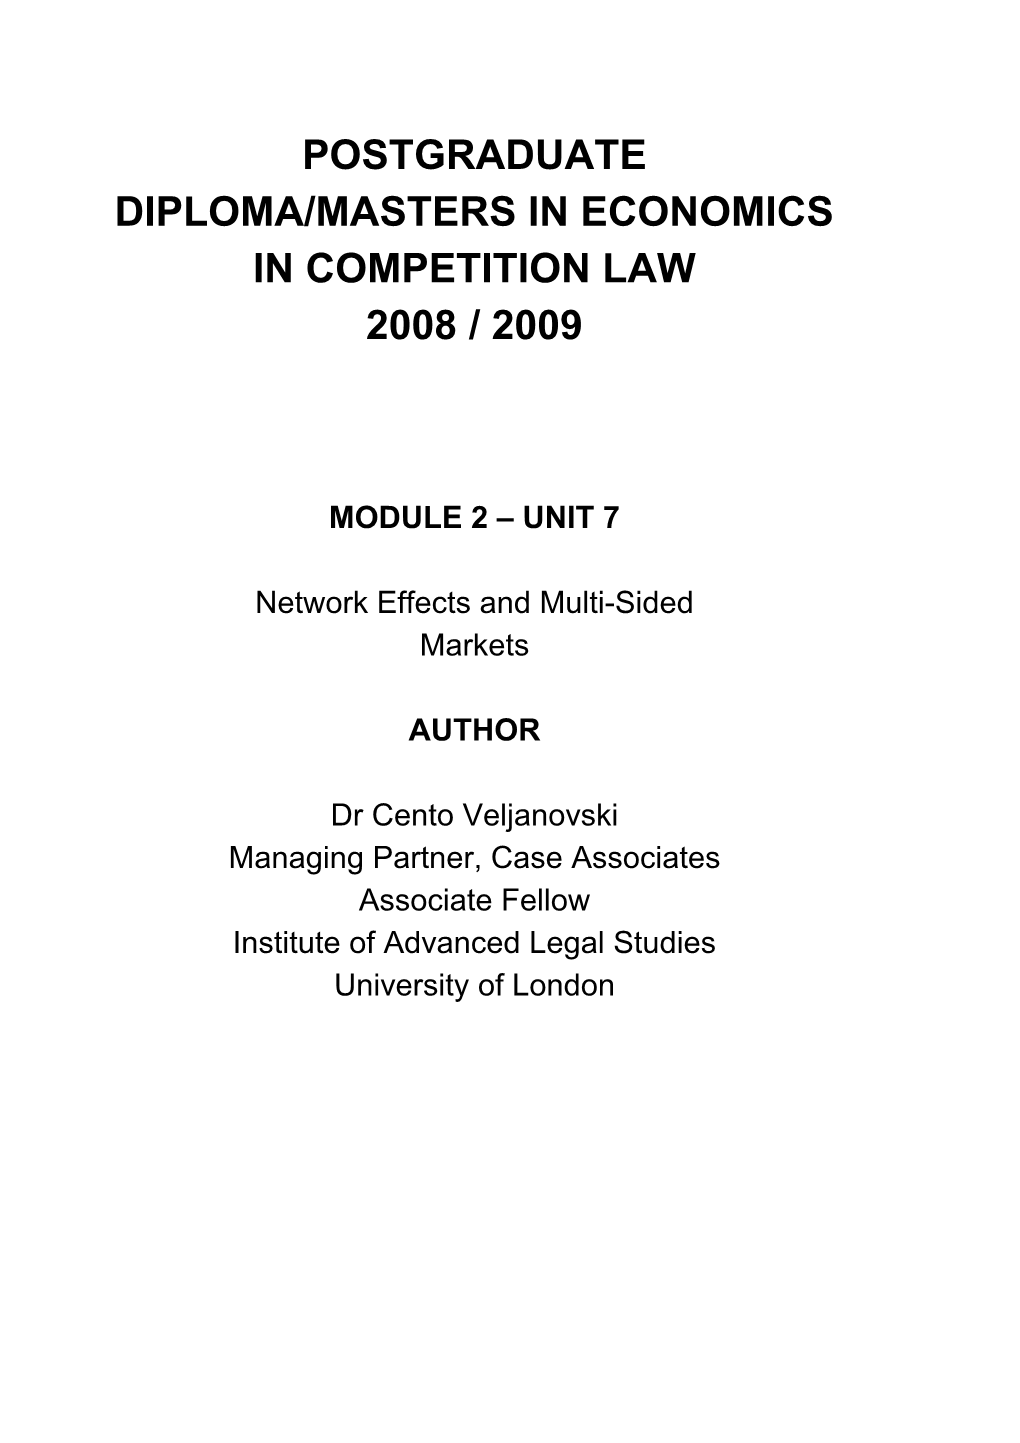 Postgraduate Diploma/Masters in Economics in Competition Law